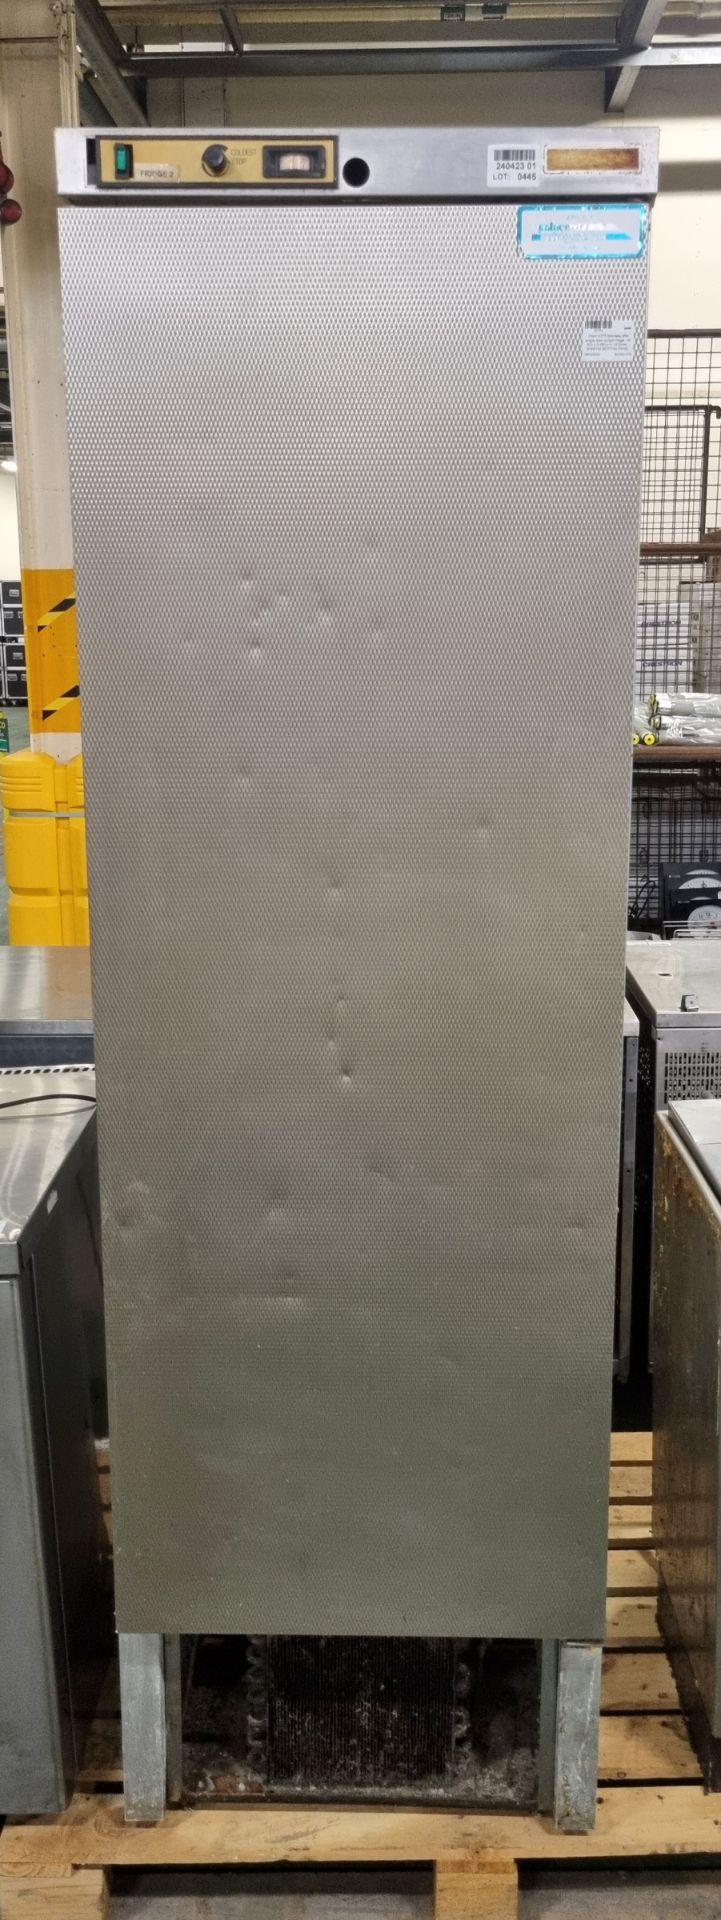 Gram K375 stainless steel single door upright fridge - W 600 x D 650 x H 1970mm